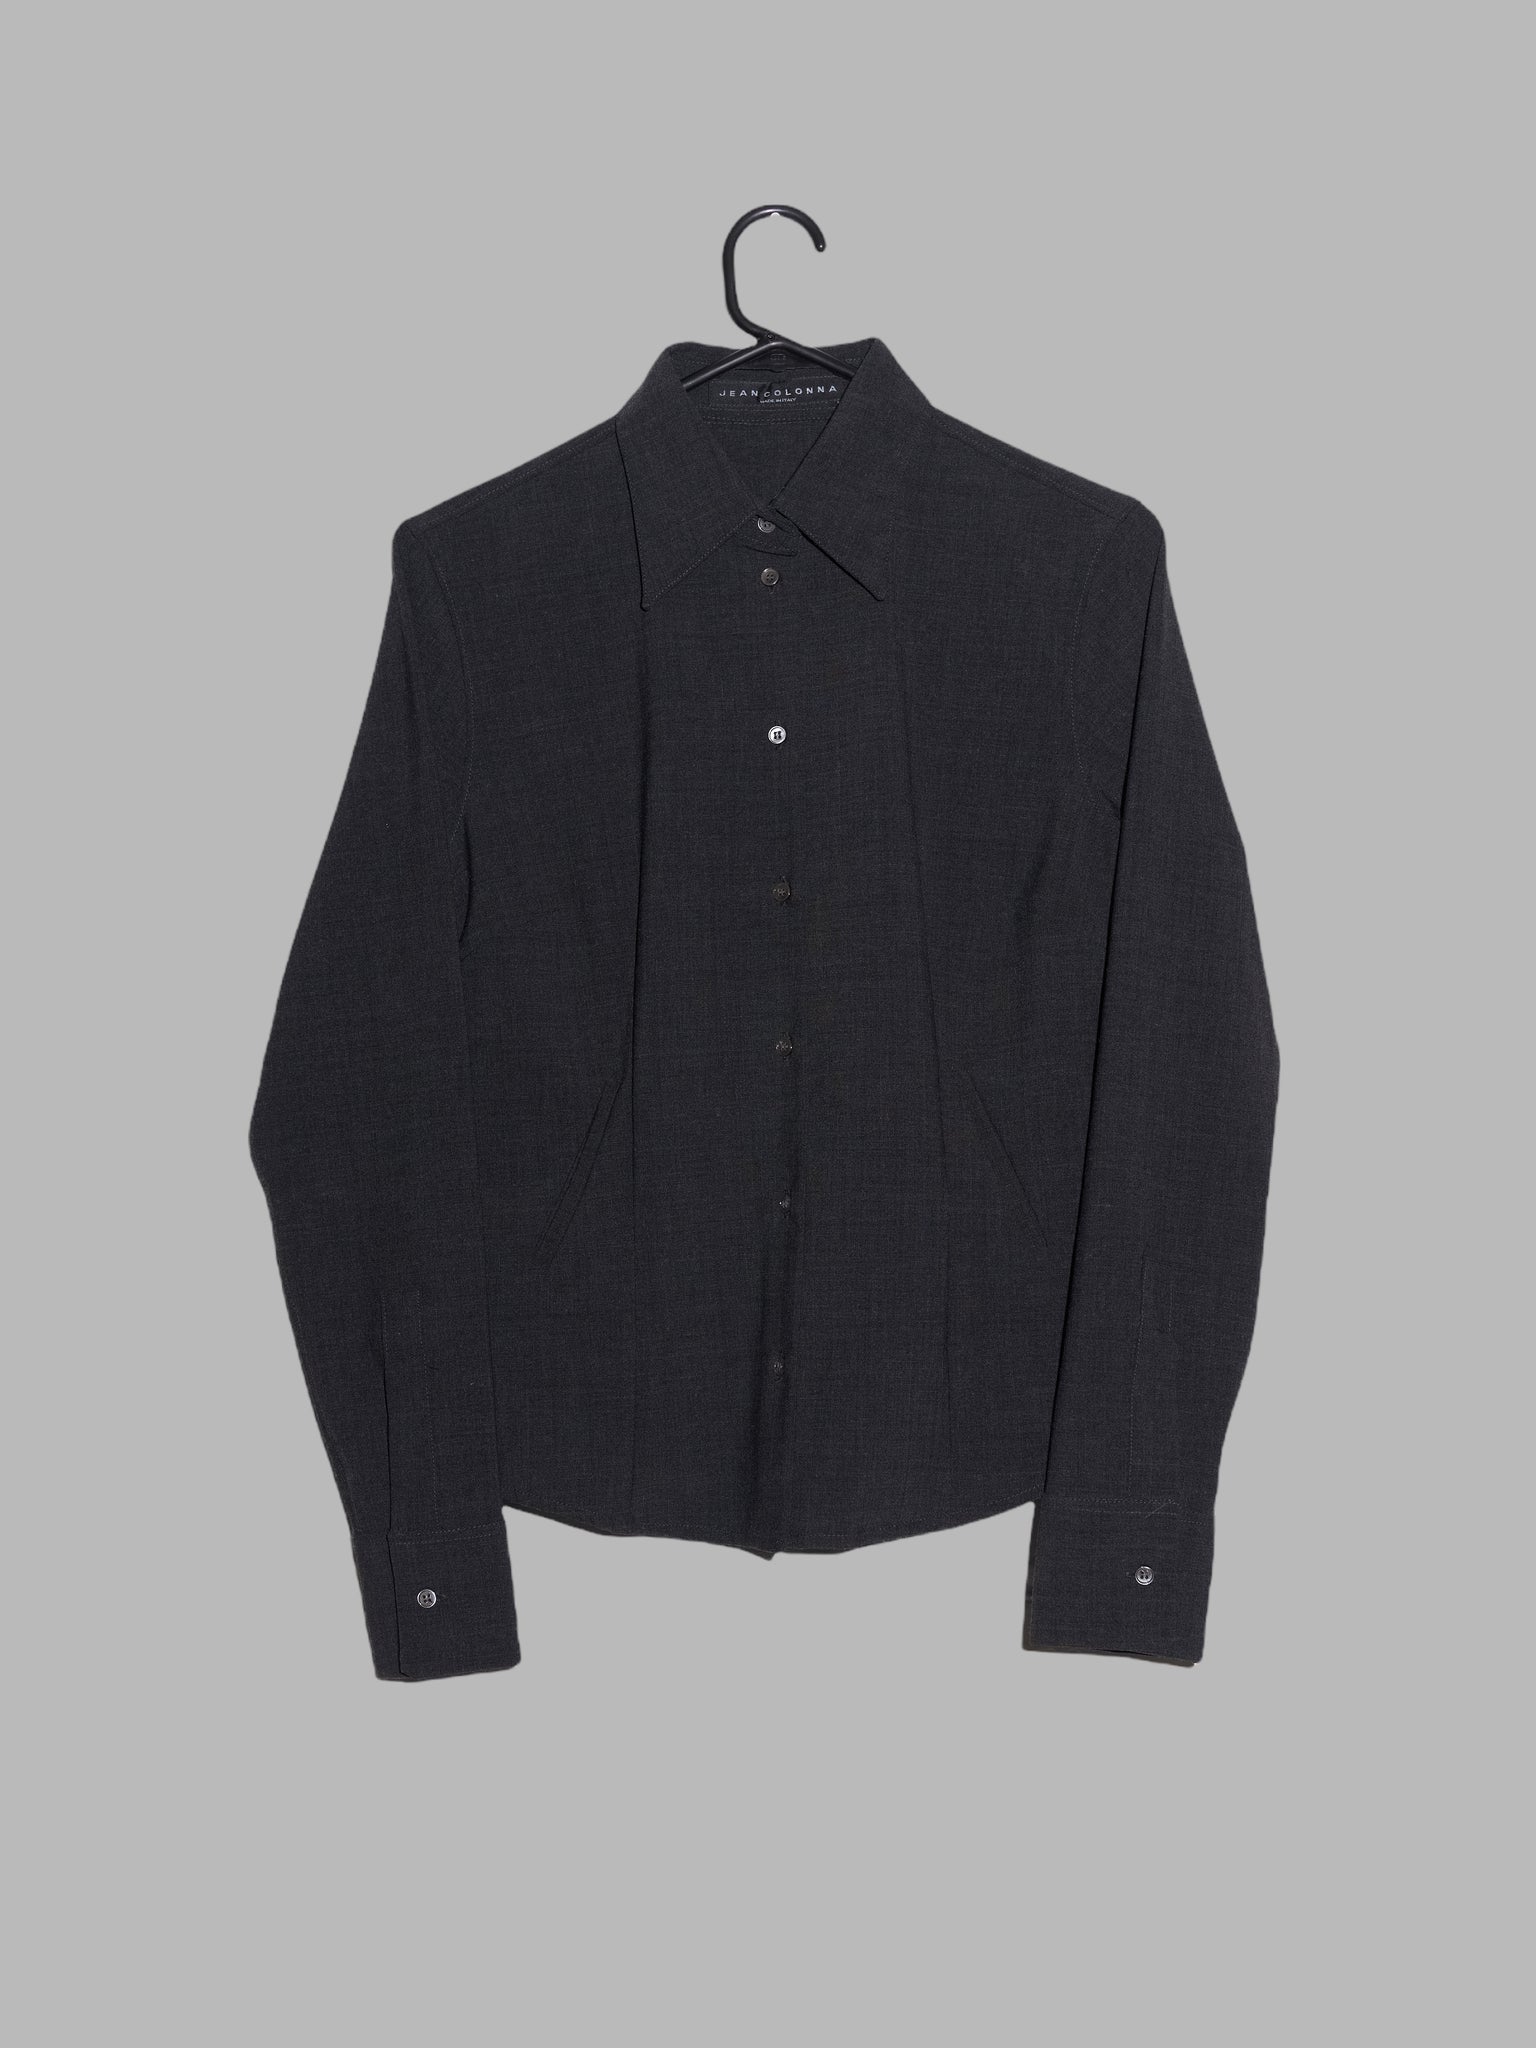 Jean Colonna grey stretch wool long sleeve shirt with welt pockets - sz 42